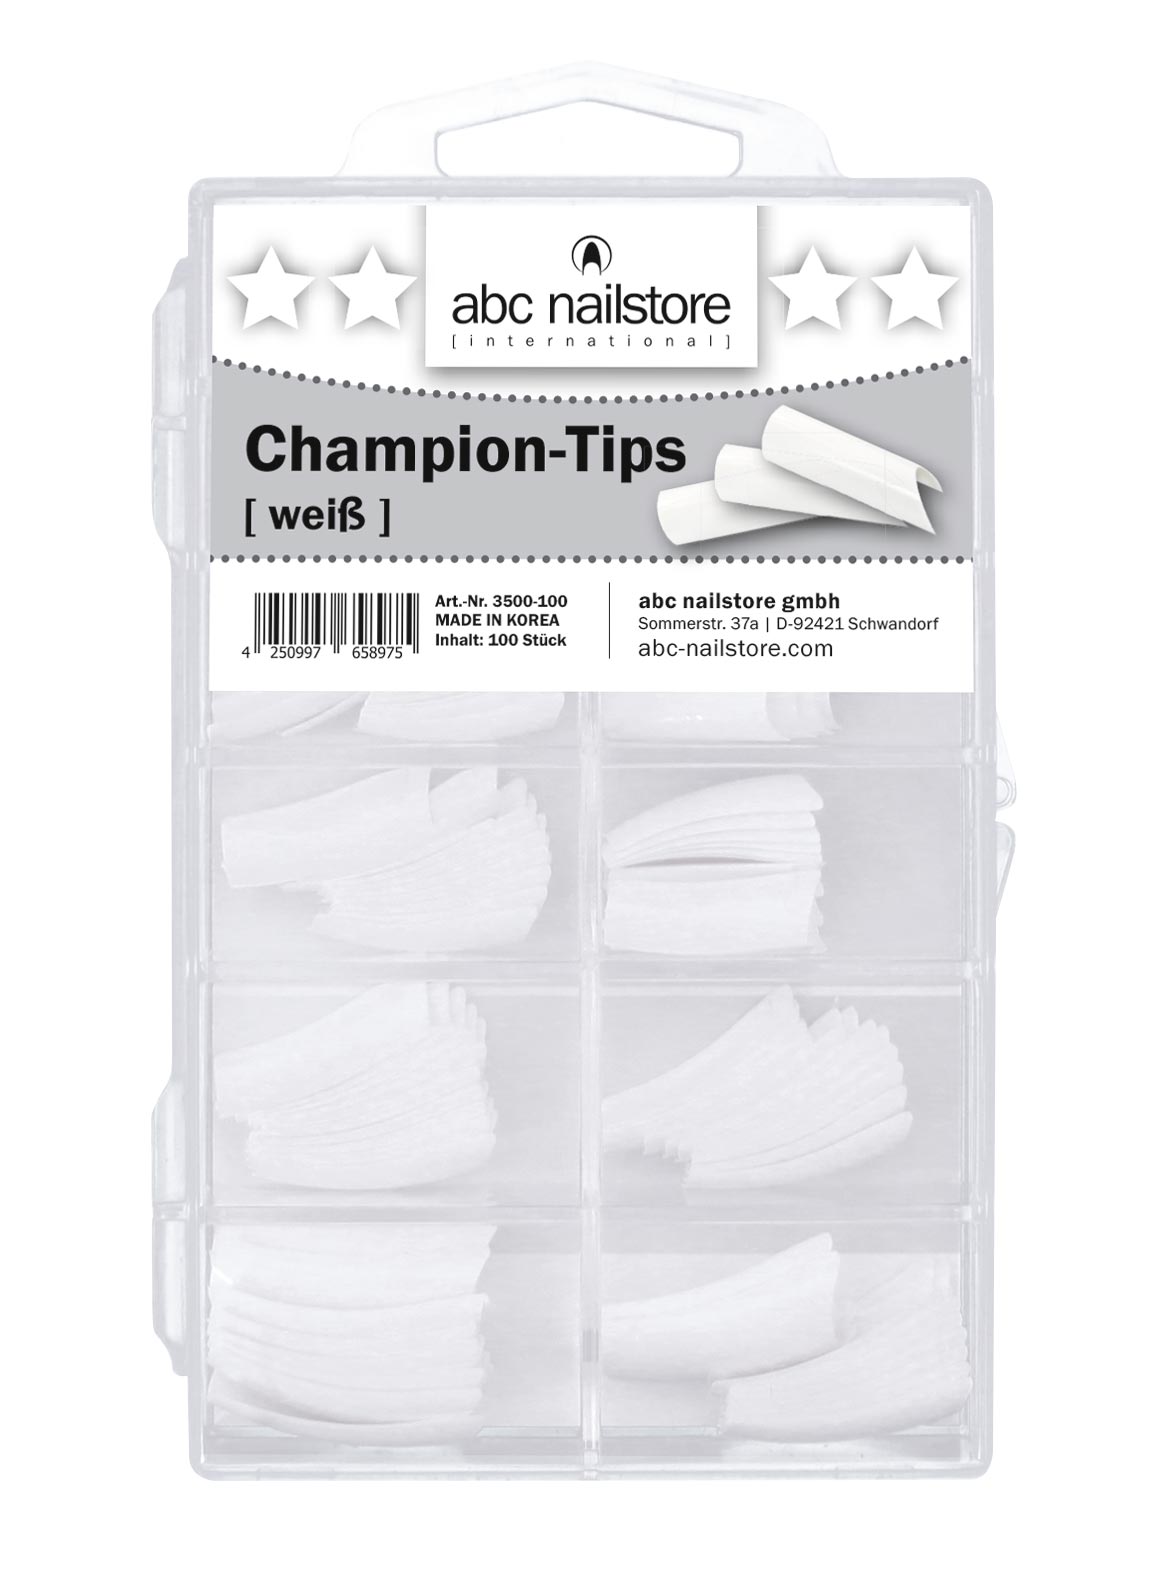 abc nailstore nail tips champion weiß, Tipbox mit 100 Stück